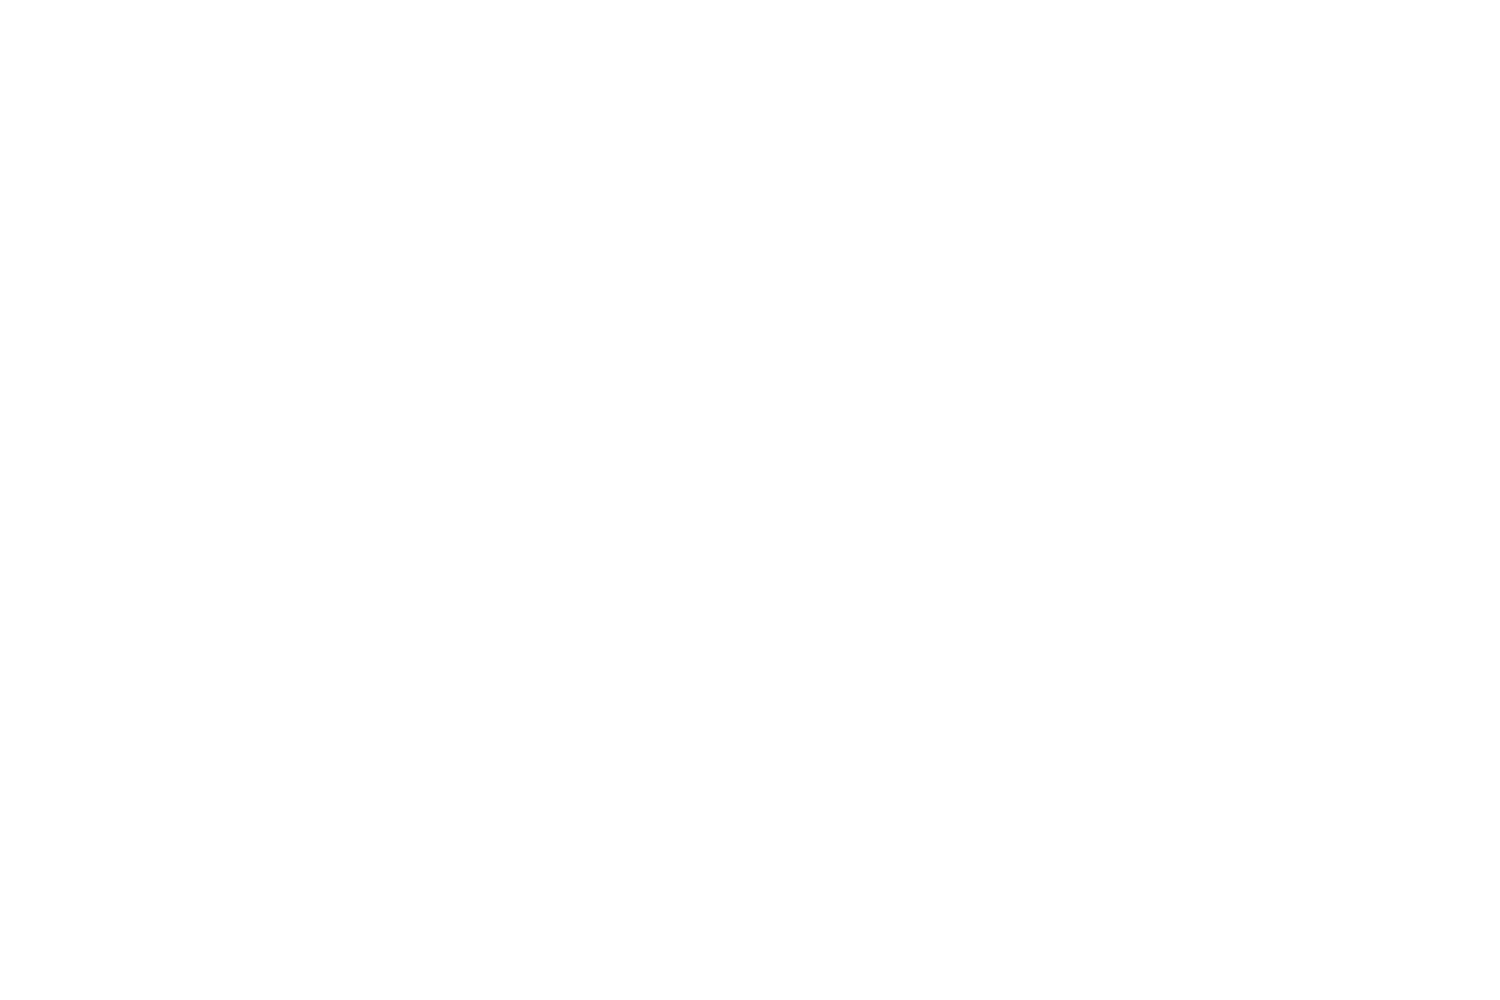 Beer City Bread Co